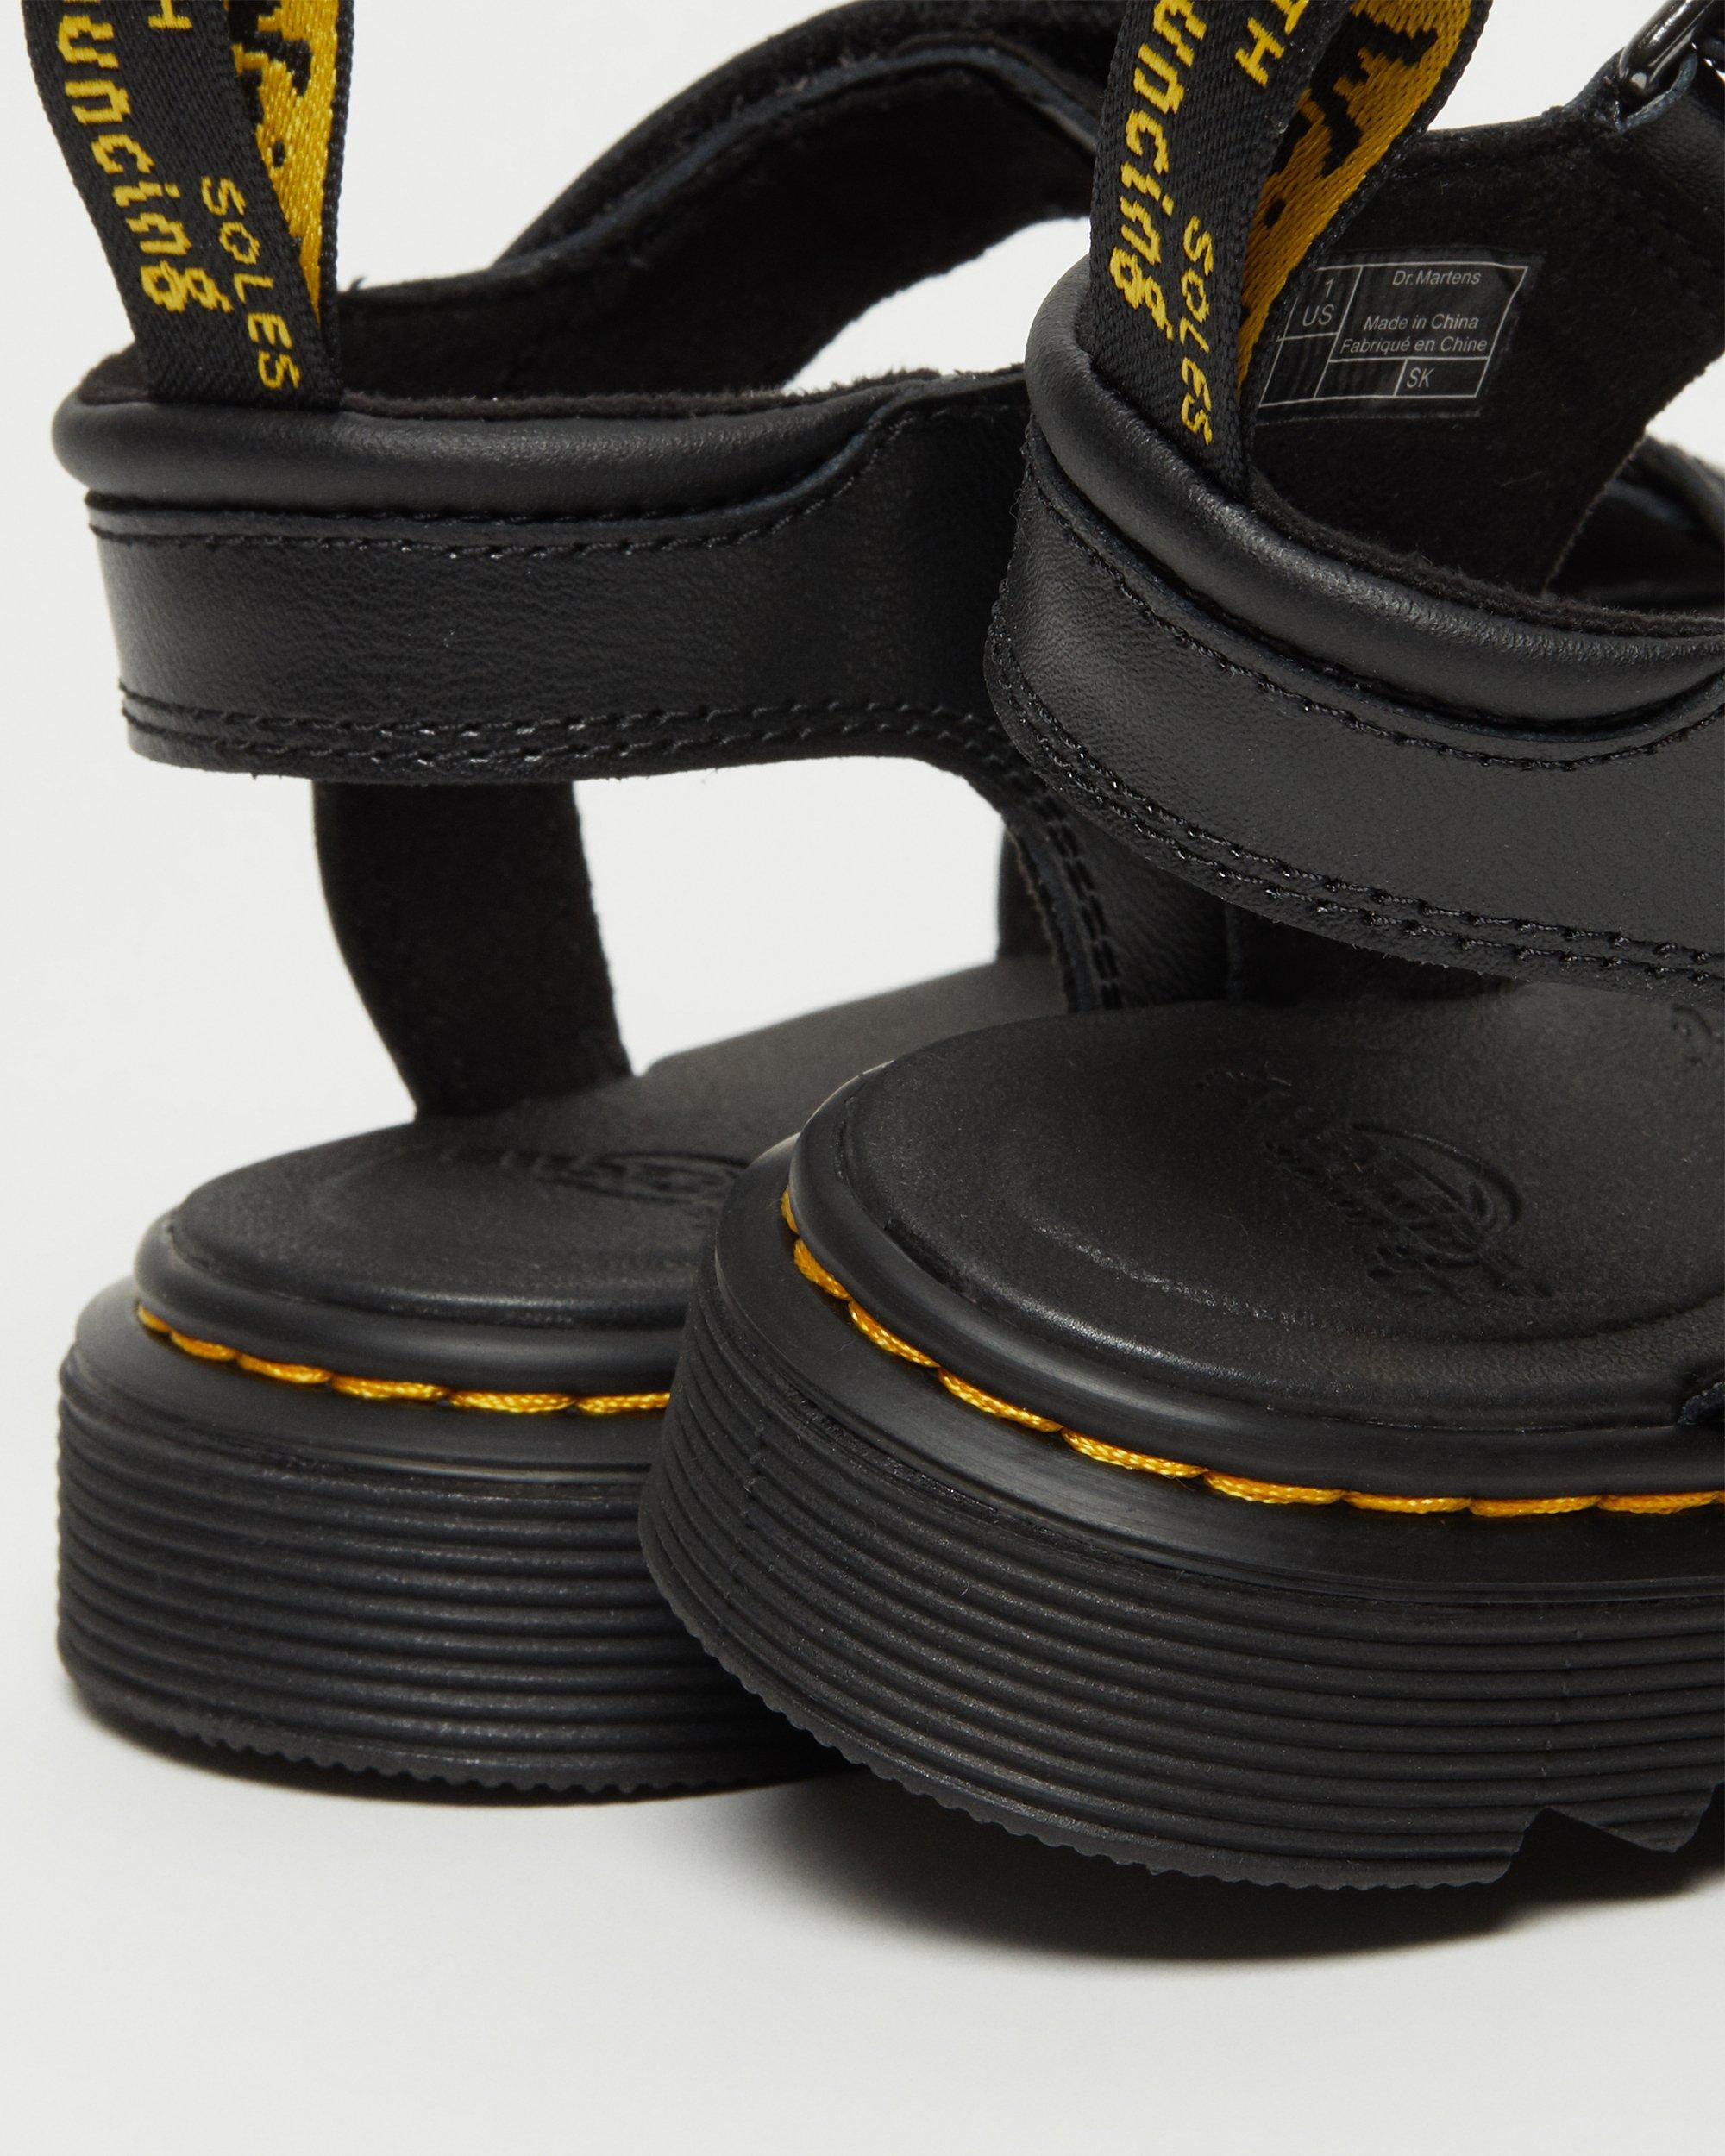 Junior Klaire Leather Strap Sandals in Black